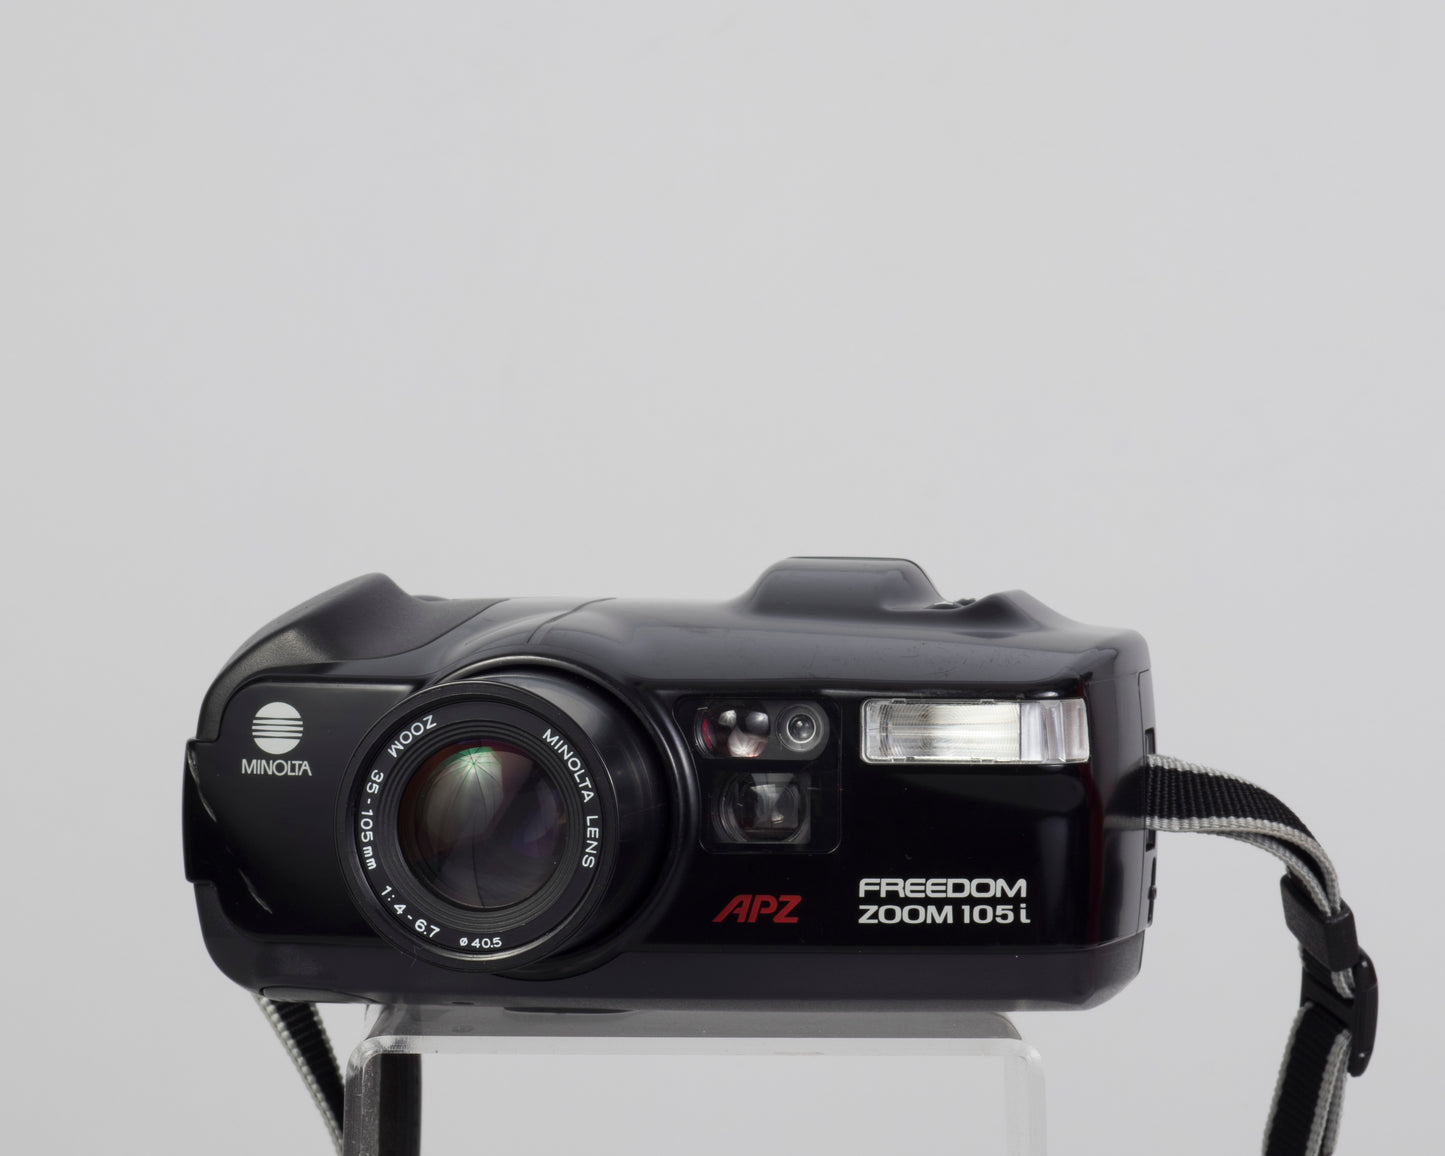 Minolta Freedom Zoom 105i 35mm film camera (mode display not working)